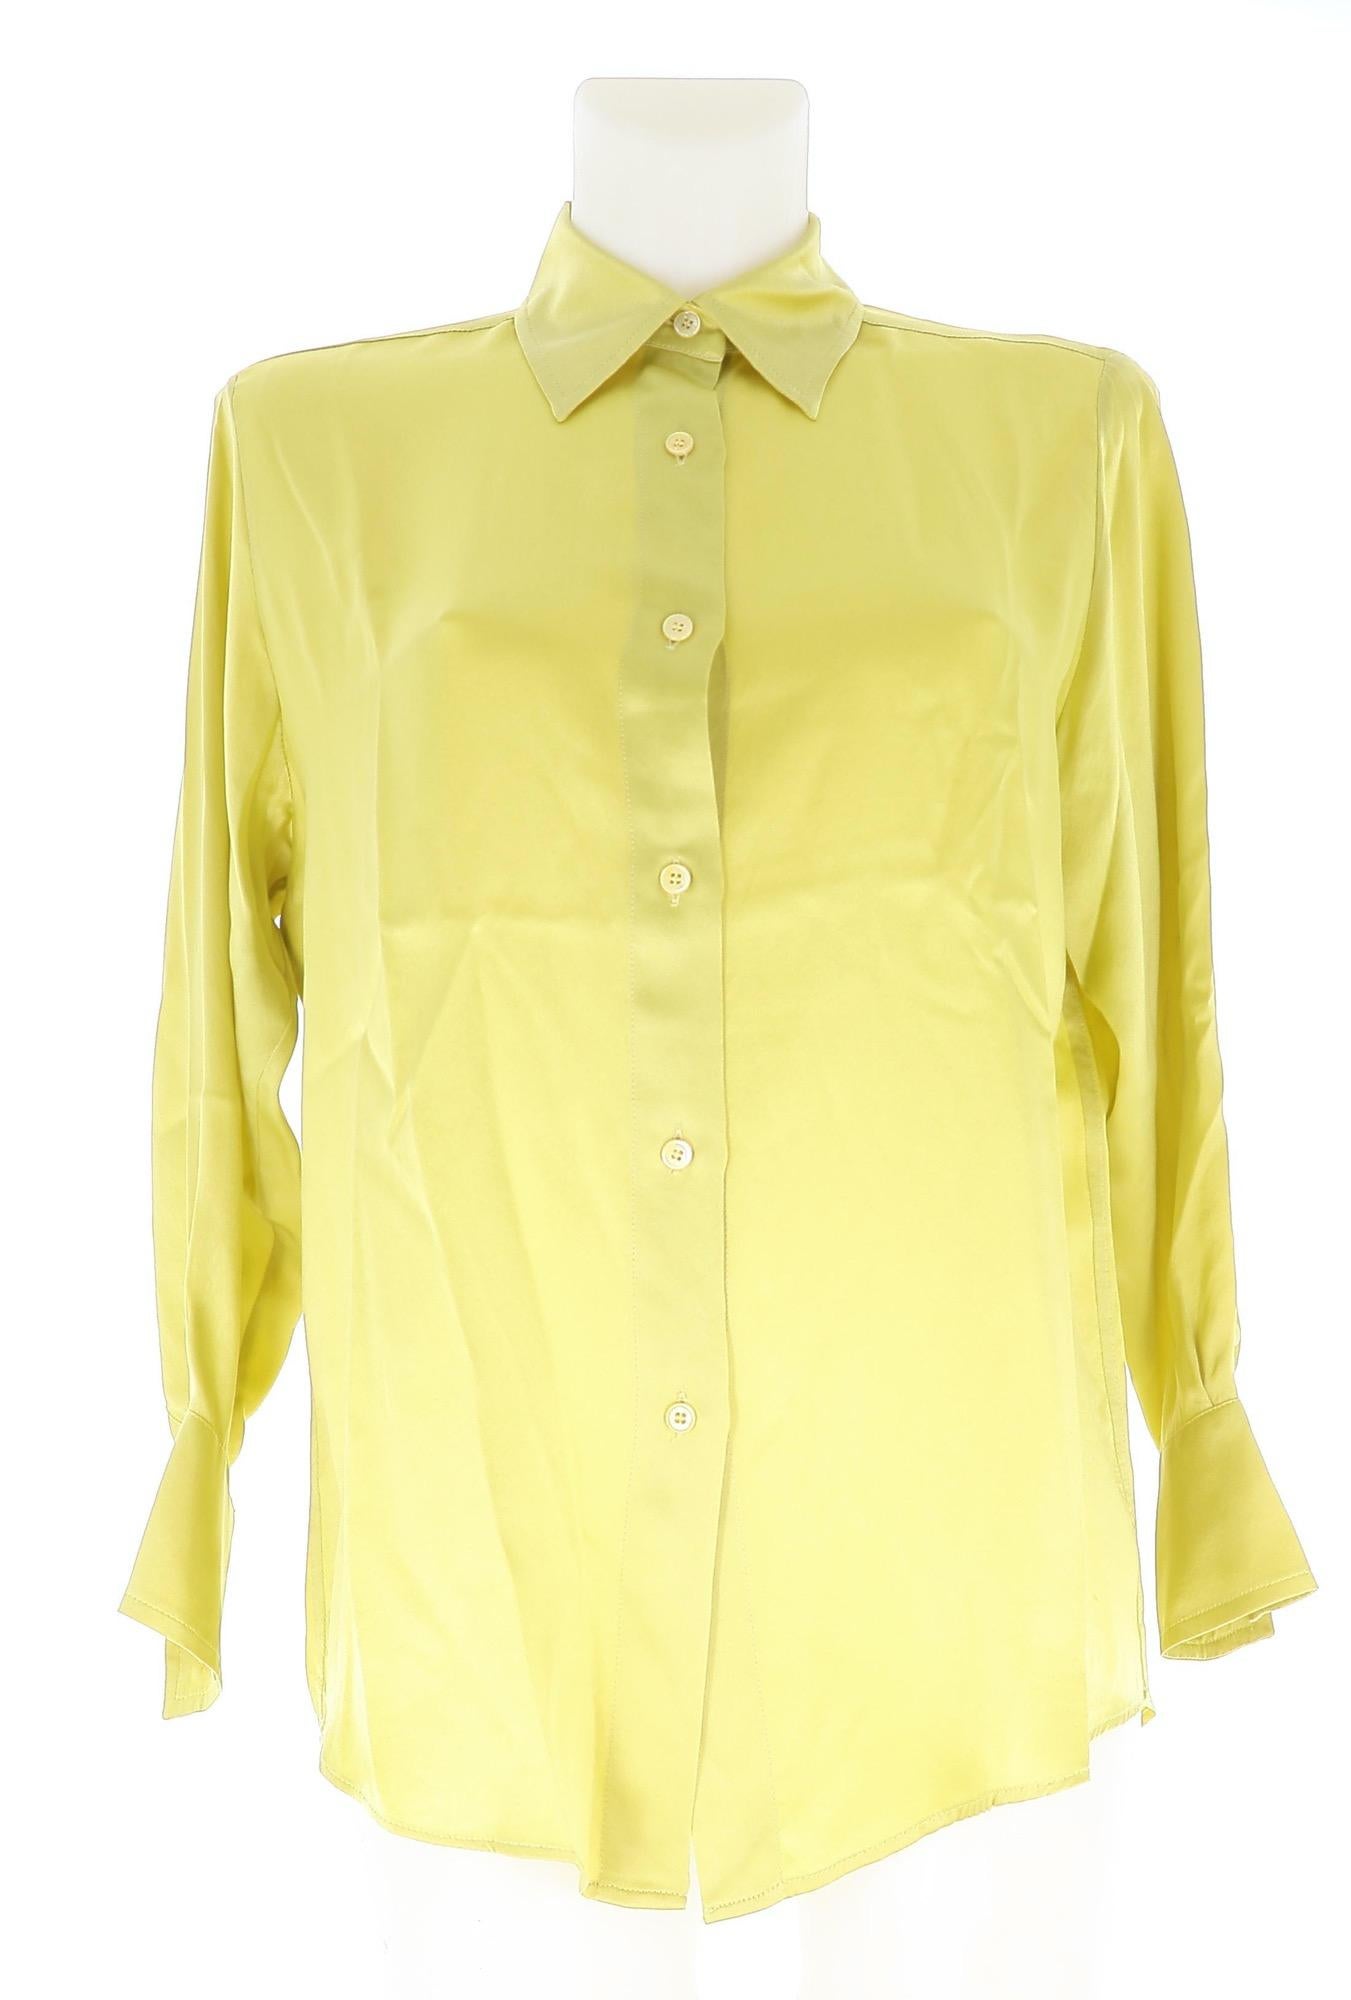 Yellow Yves Saint Laurent Green Blouse Shirt